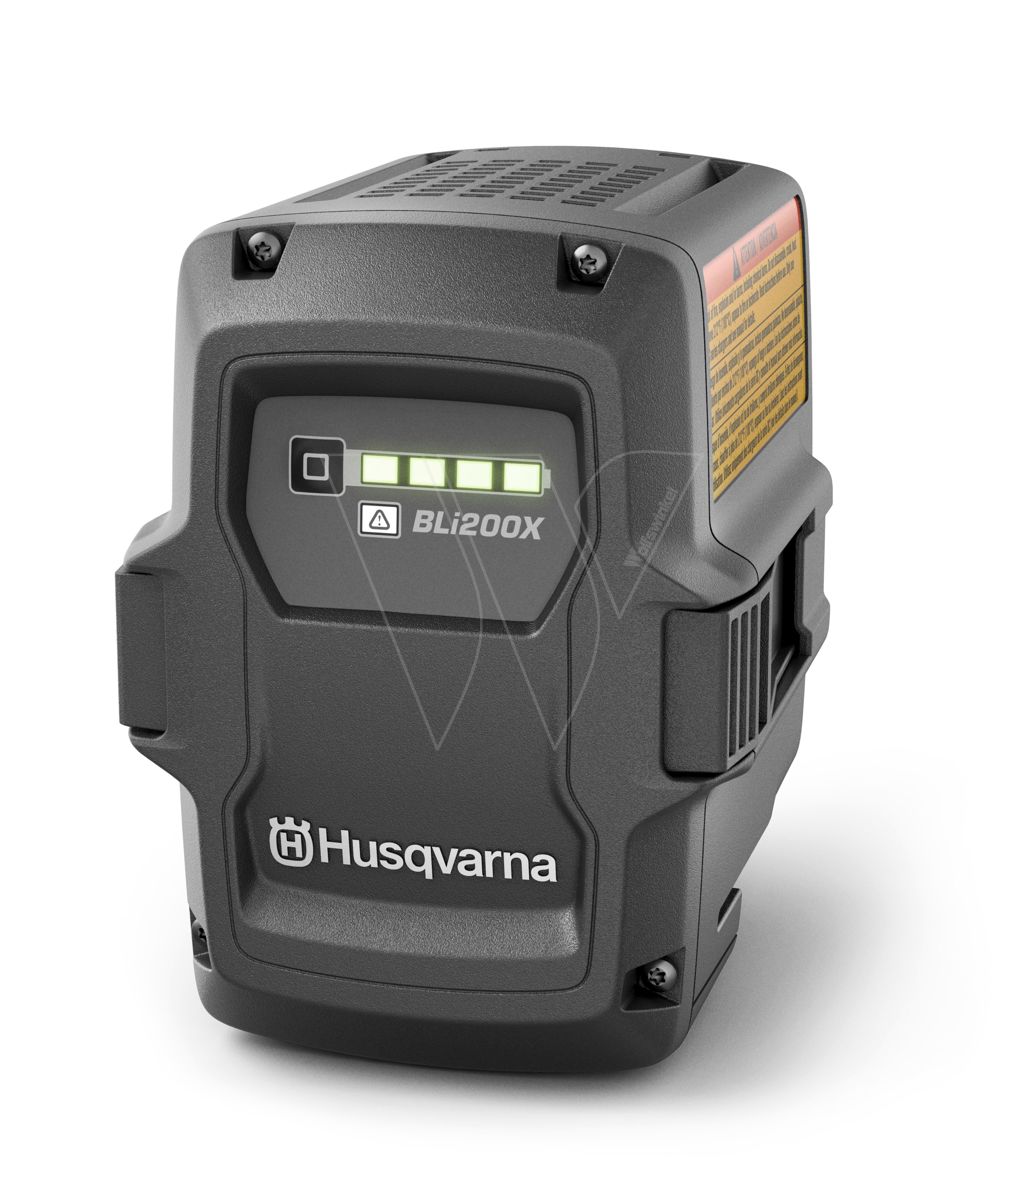 Husqvarna 530ipt5 battery hacksaw action